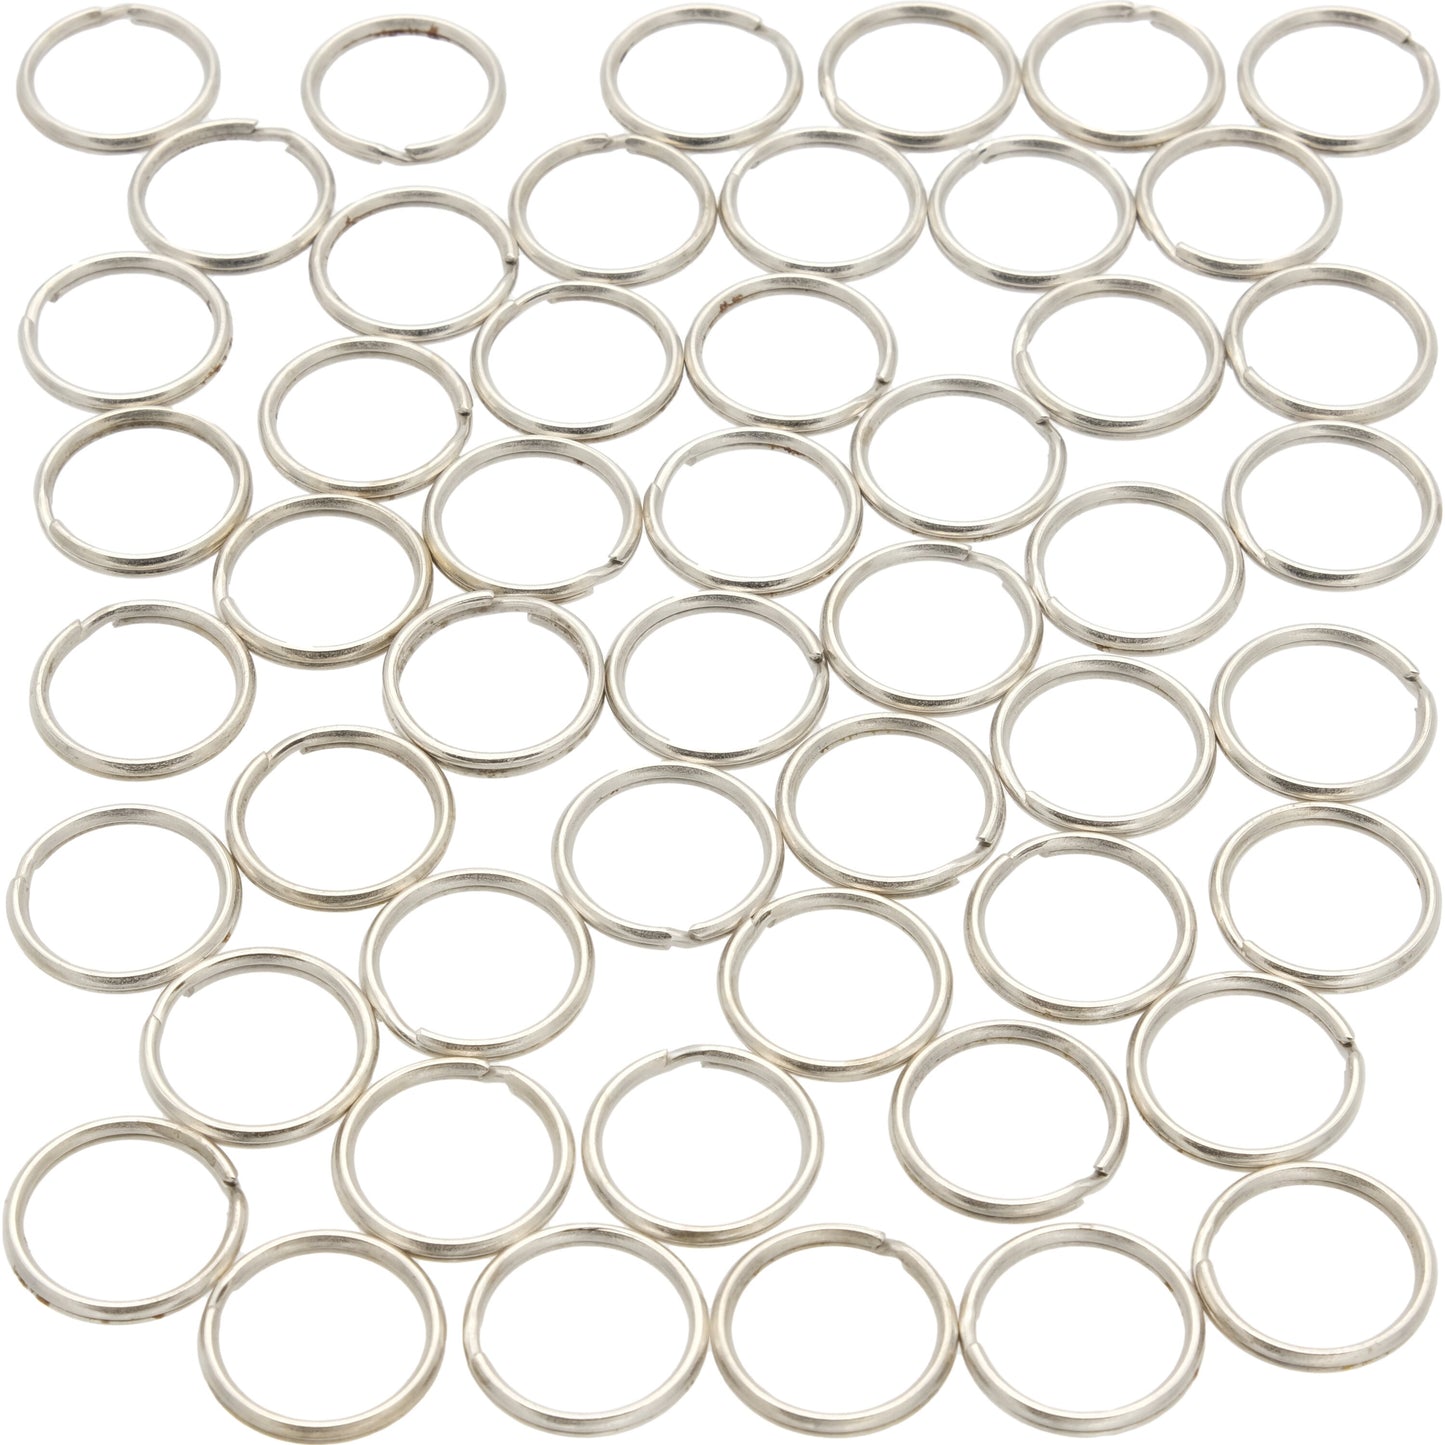 Nickel Plated Key Chain Ball Chain & Metal Split Rings Findings Kit 100 Pcs